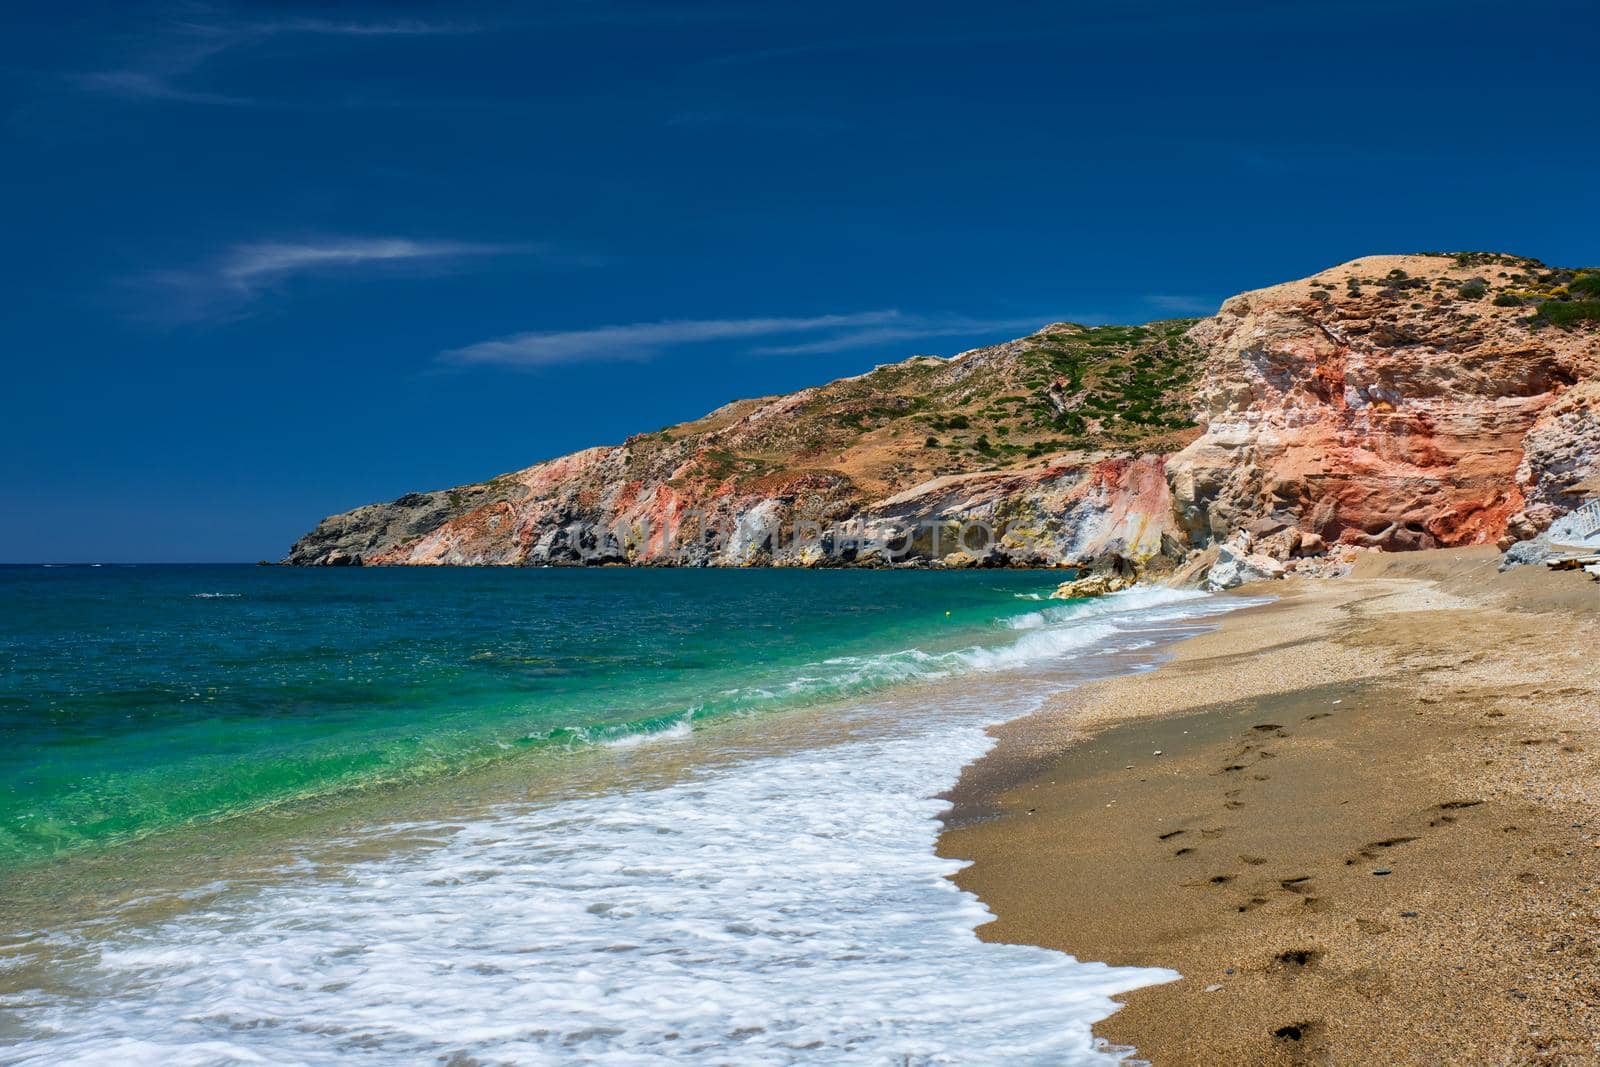 Greek beach in Greece view - Paleochori beach and waves of Aegean sea, Milos island, Cyclades, Greece. Slow motion